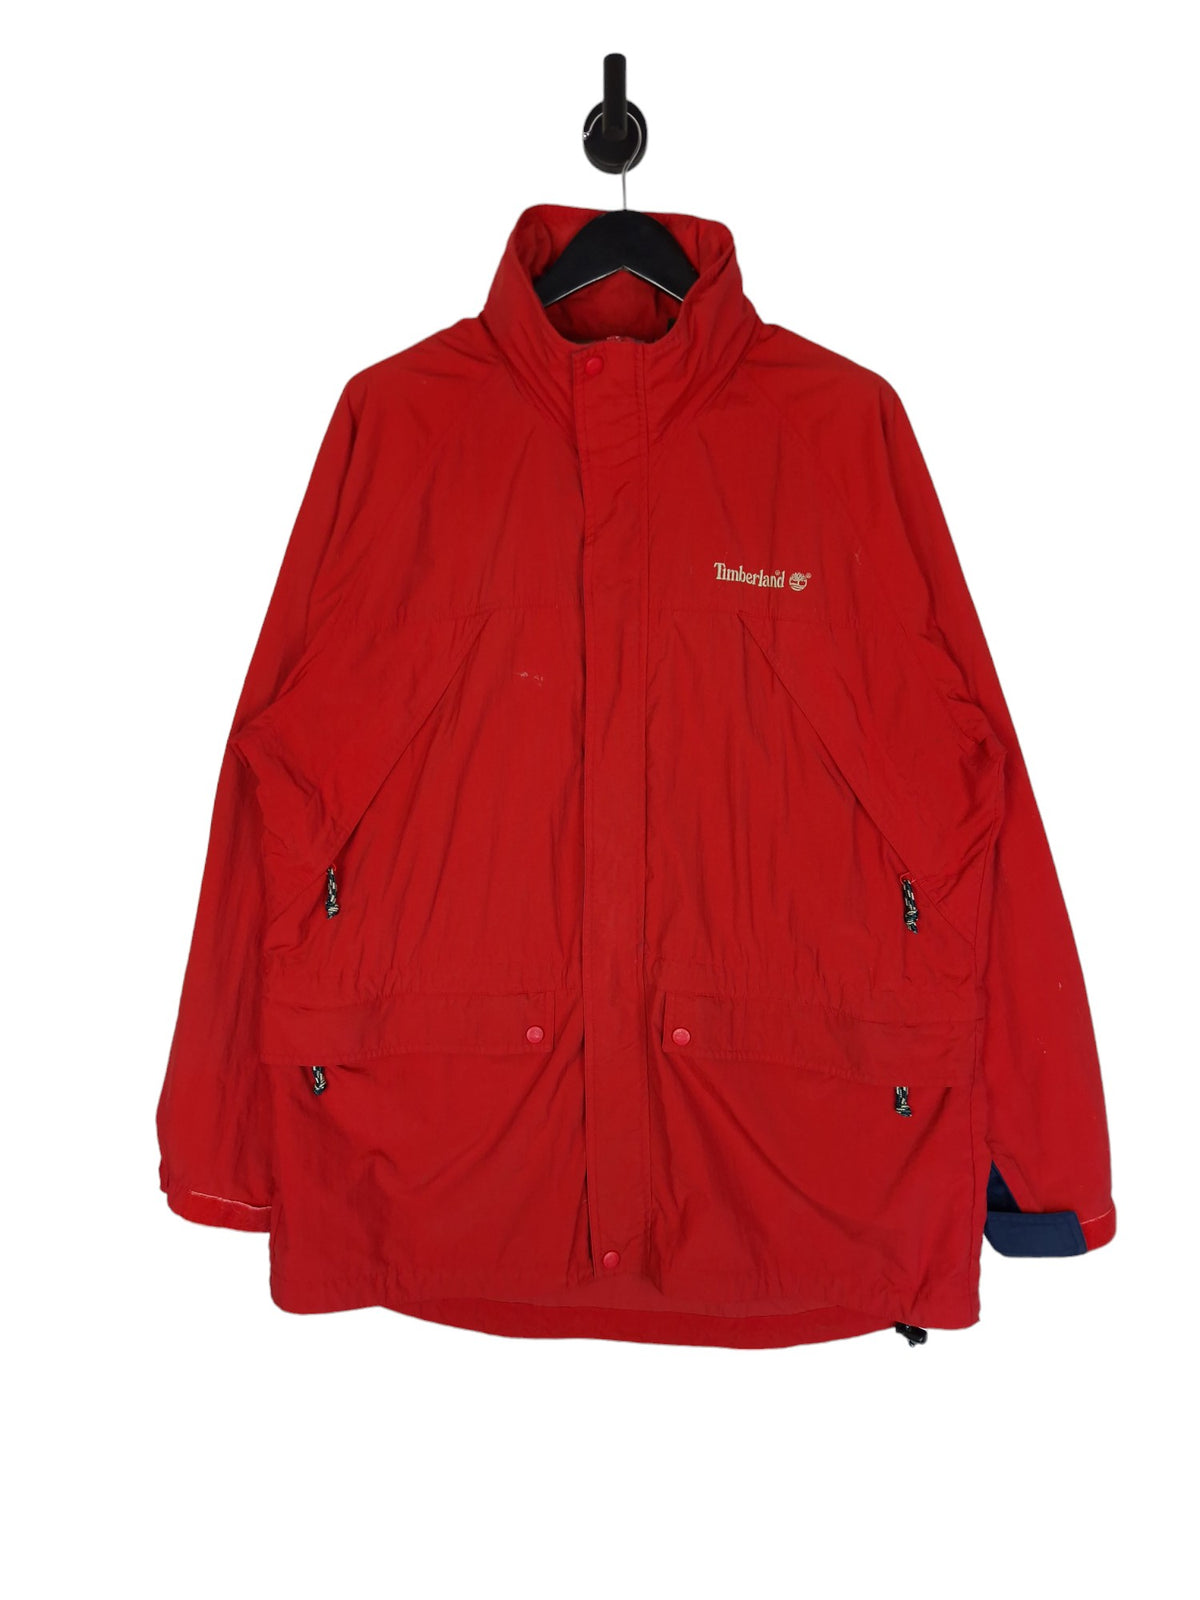 Y2K Timberland Rain Jacket - Size L/XL